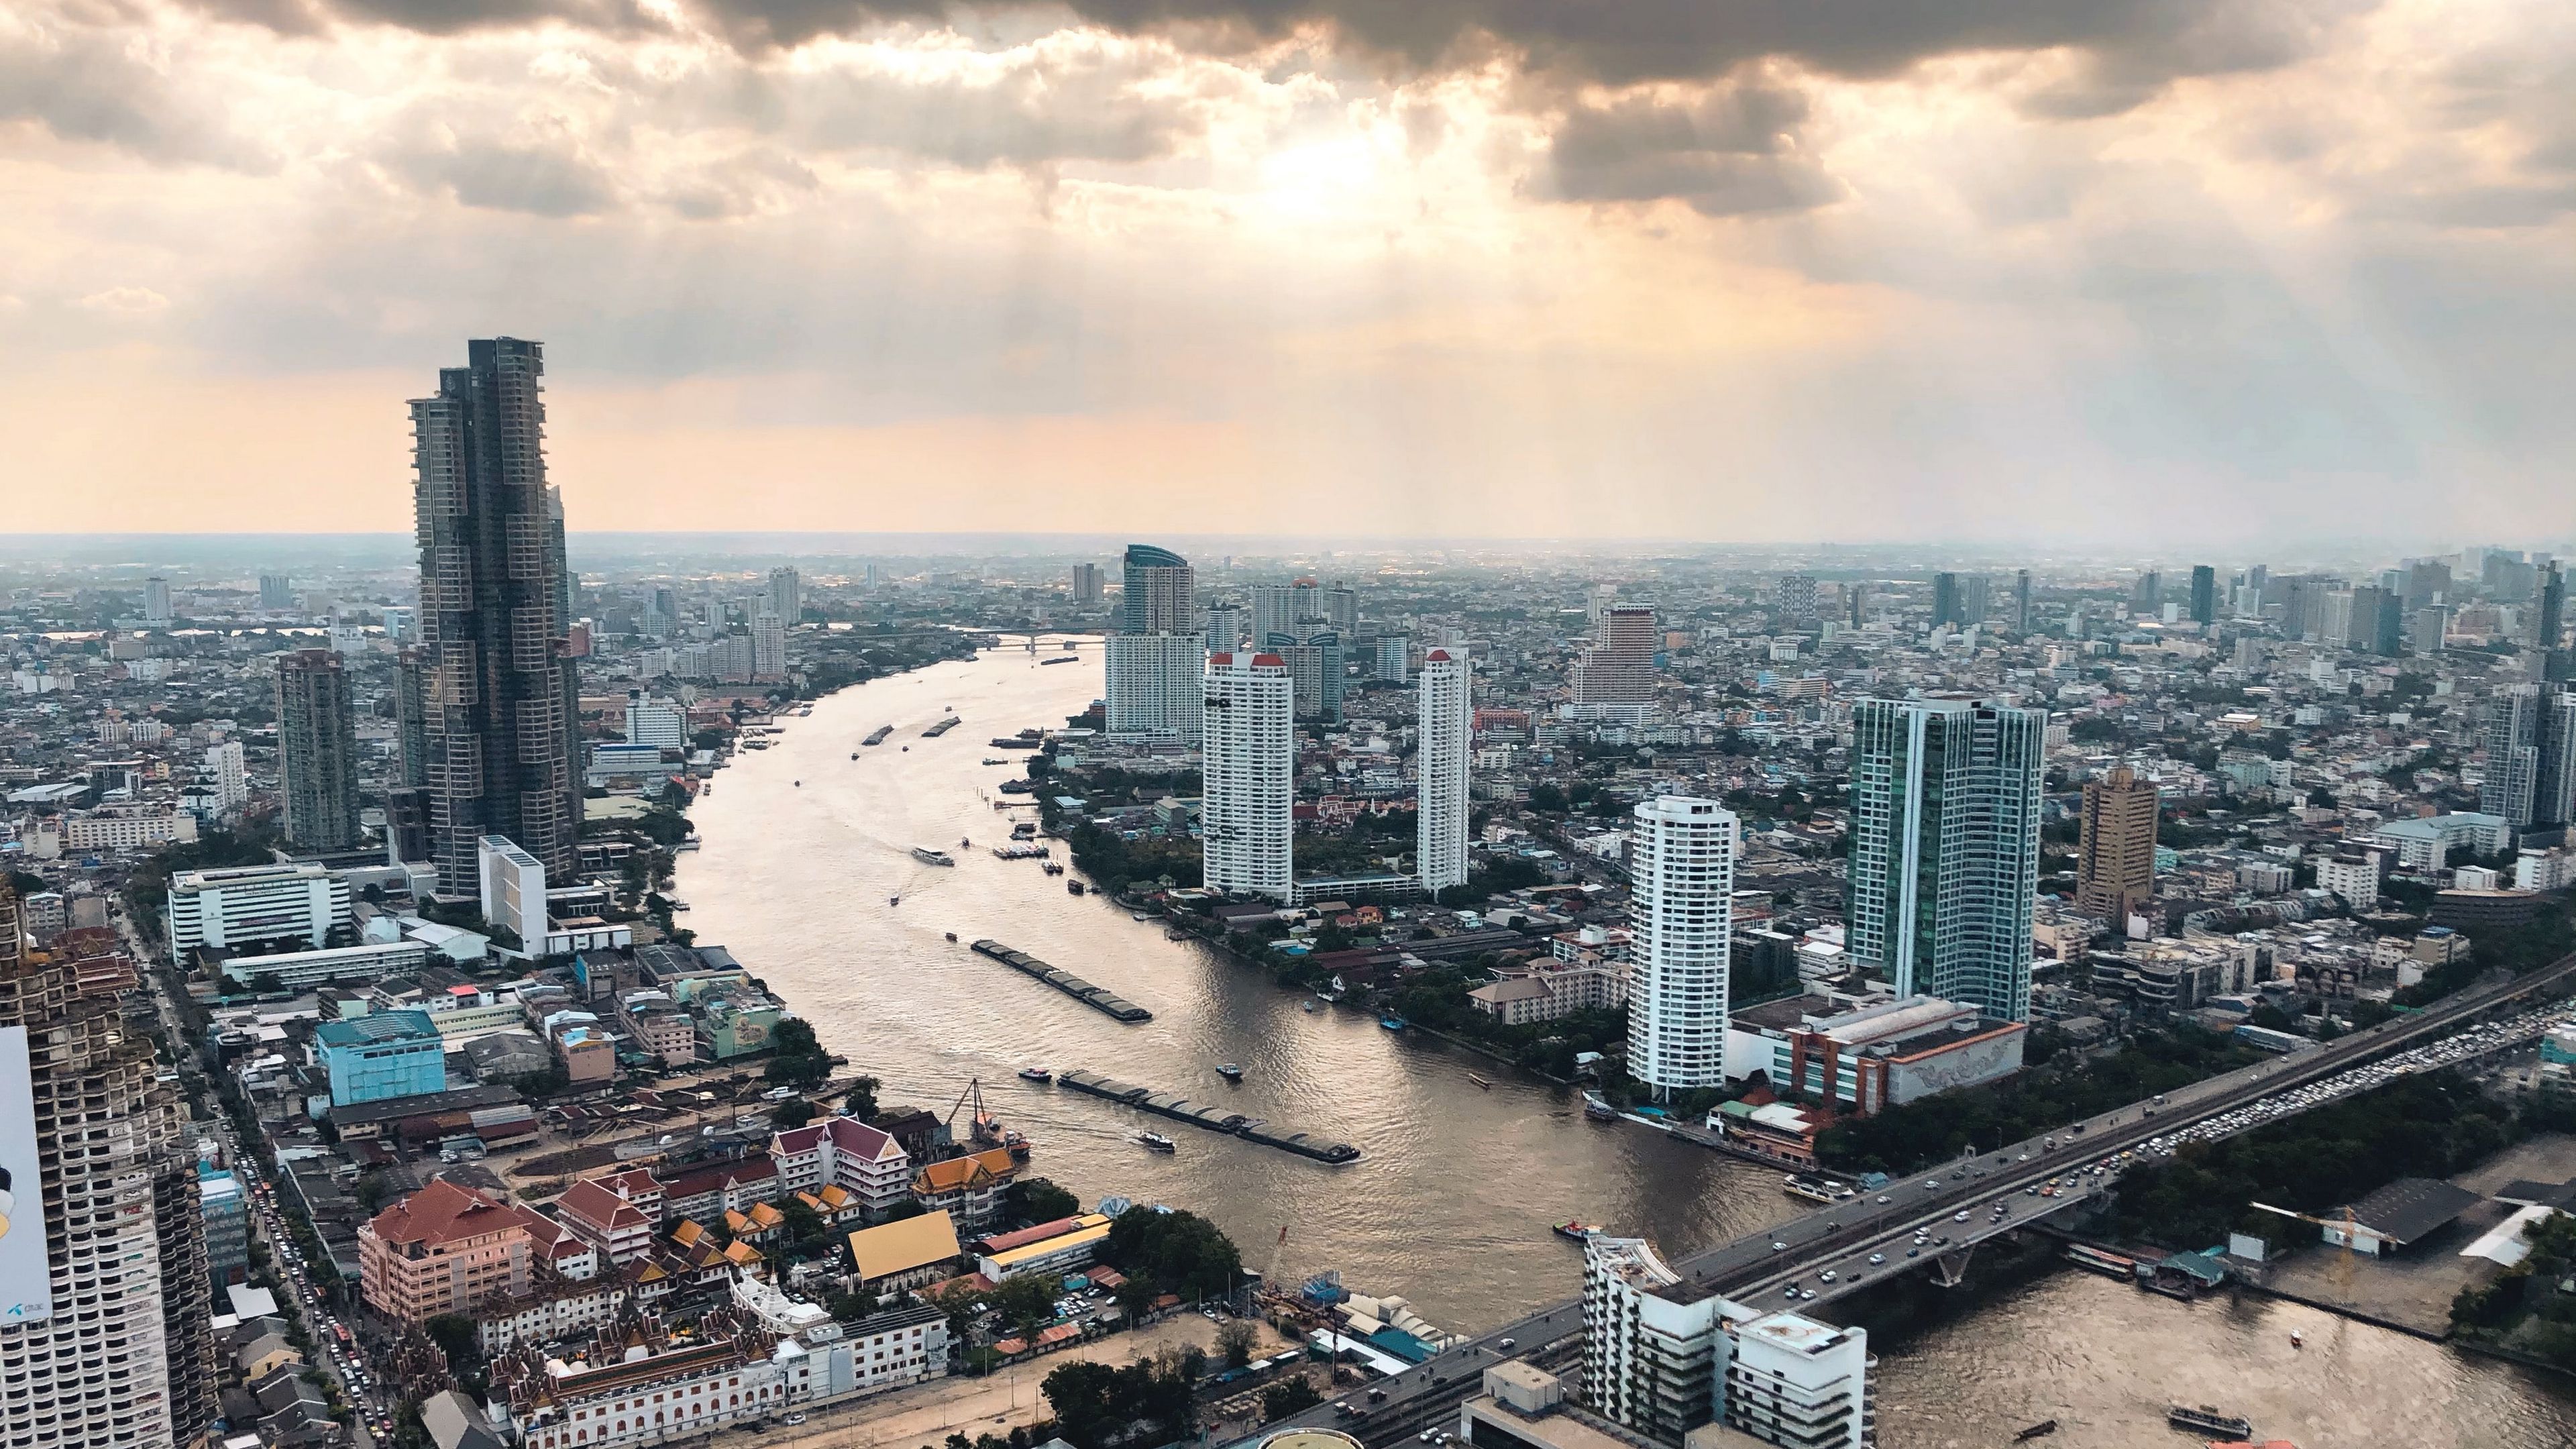 Download wallpaper 3840x2160 city, aerial view, buildings, river, skyline, bangkok  4k uhd 16:9 hd background